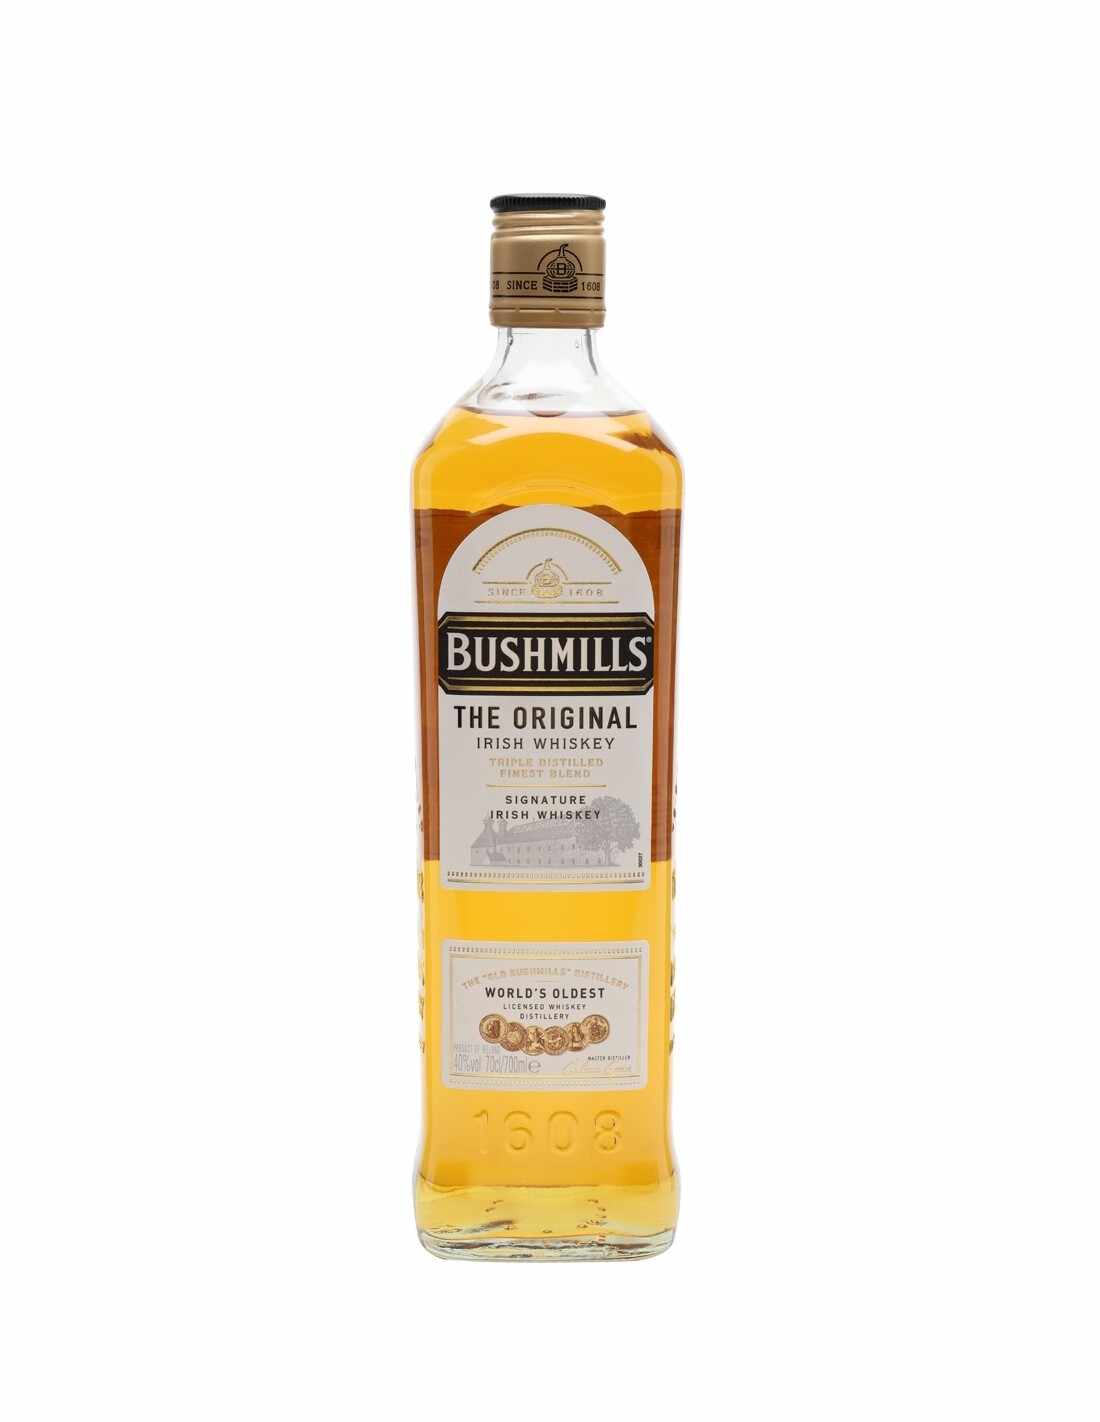 Whisky Bushmills The Original, 0.7L, 40% alc., Irlanda